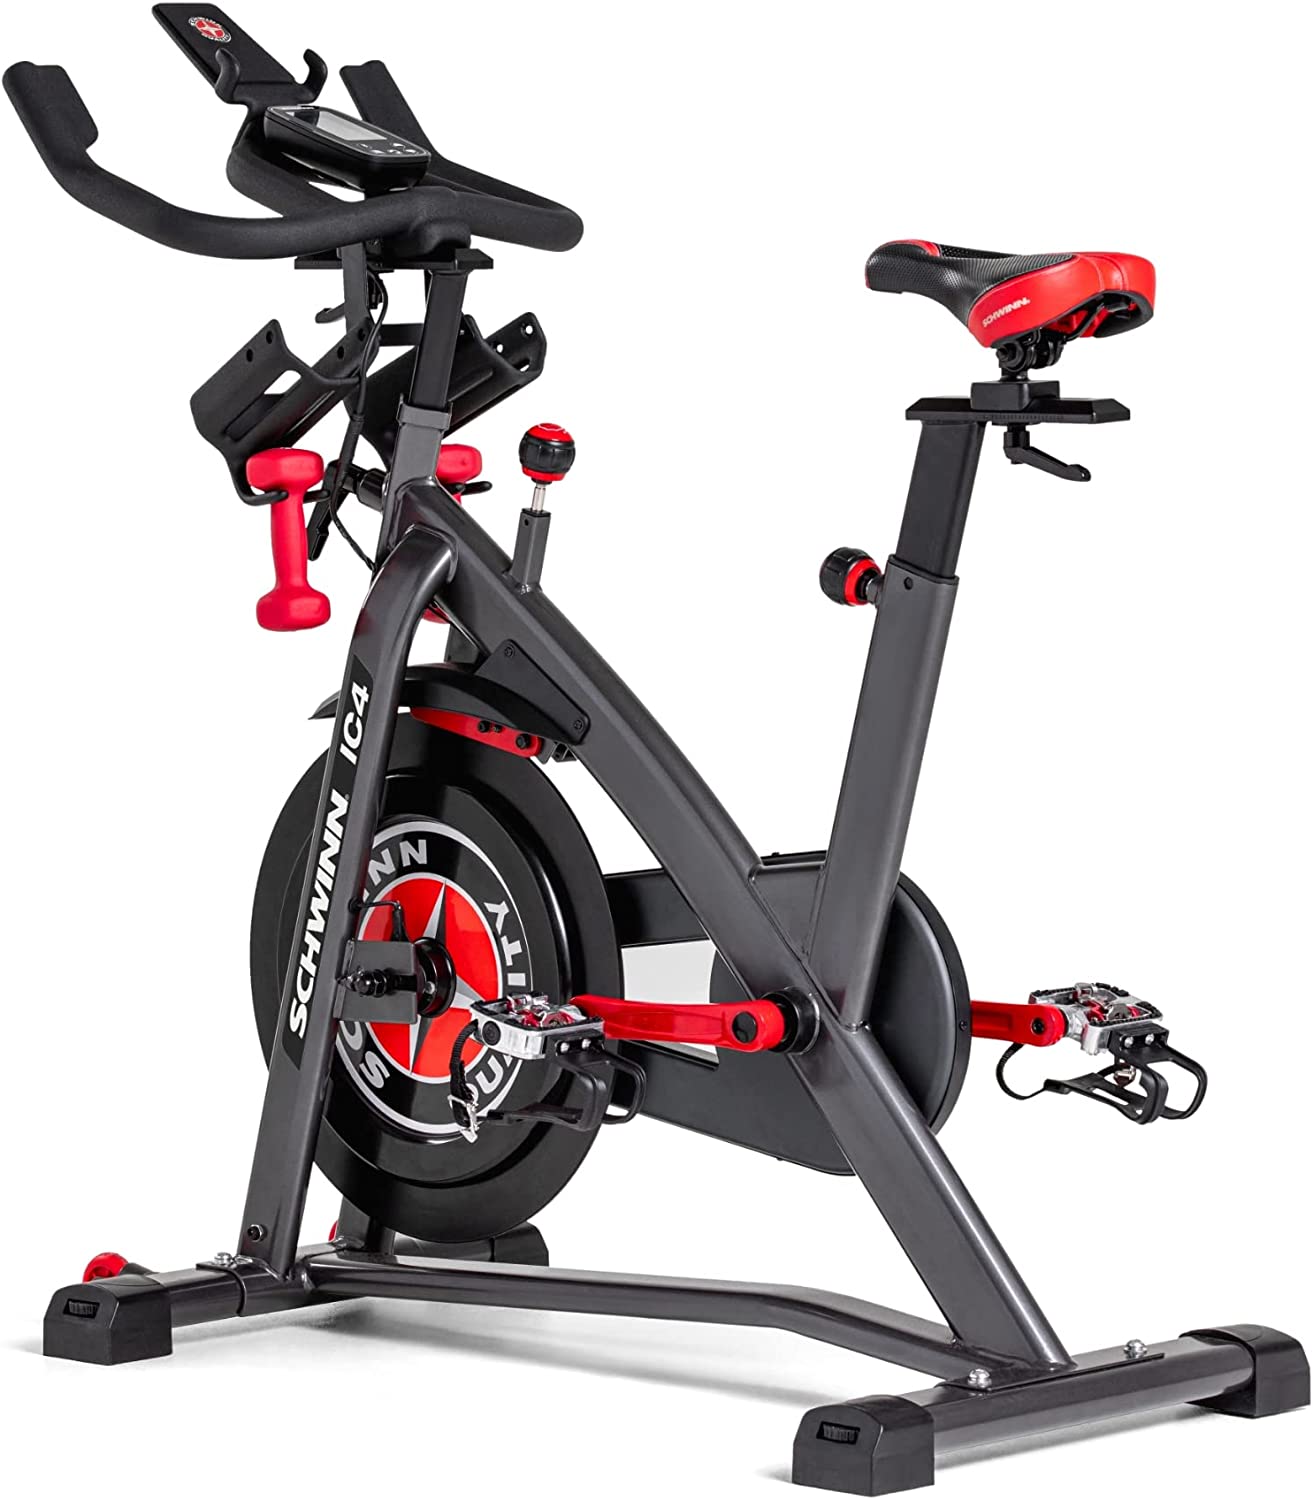 Schwinn Fitness Indoor Cycling Exercise Bike Series - $500